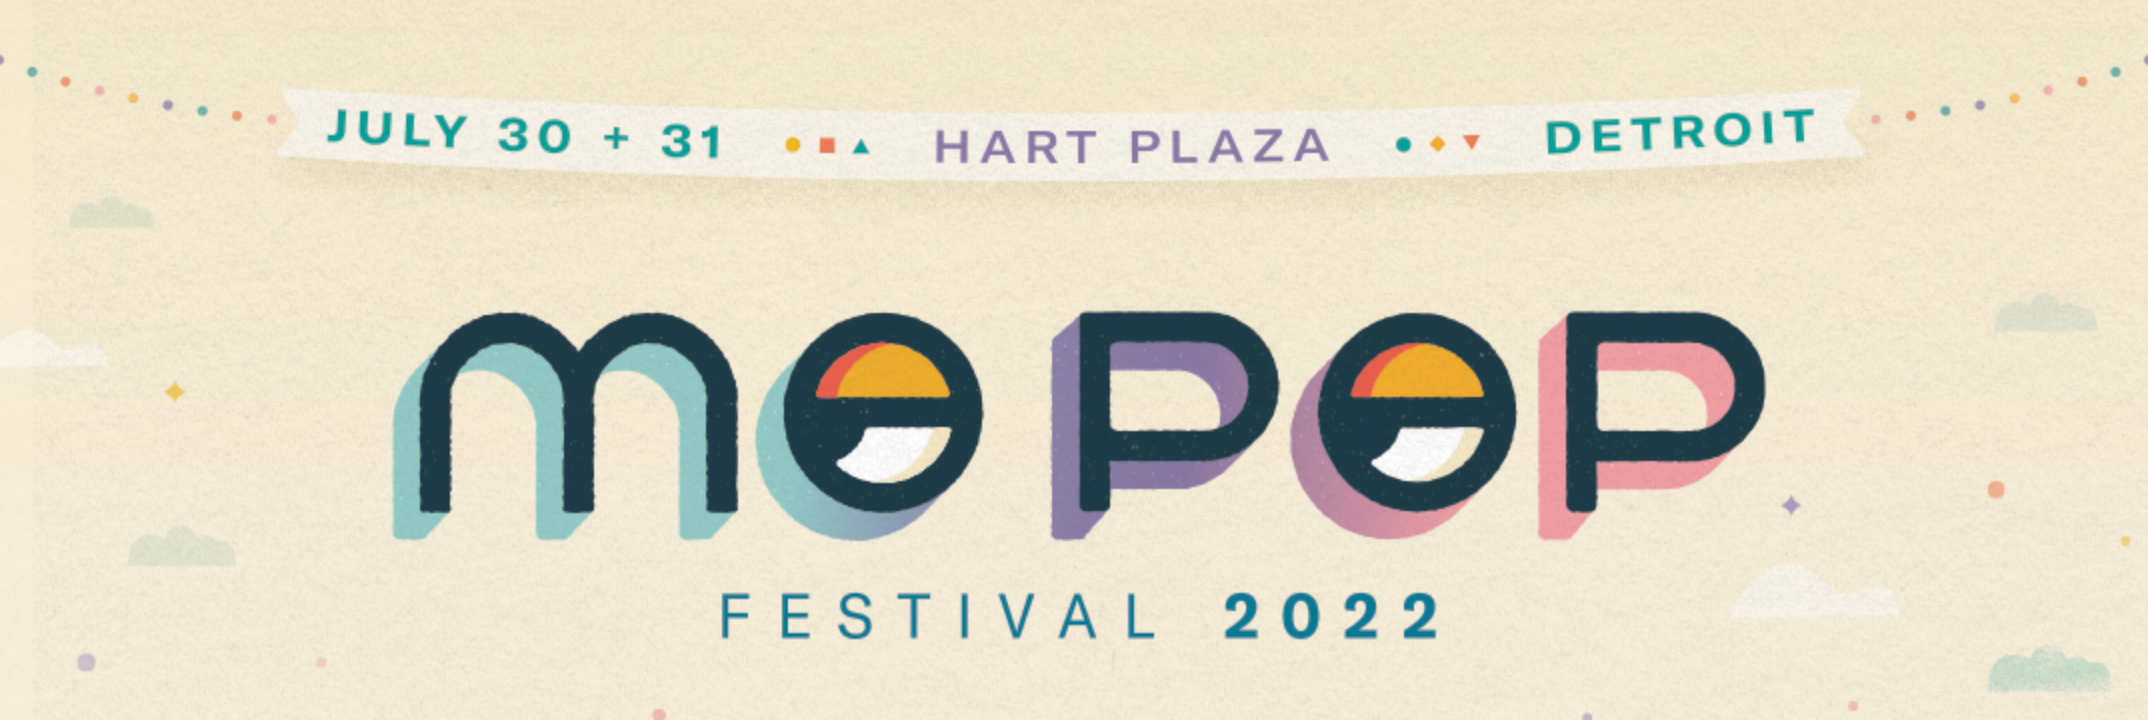 Mo Pop Festival 2022 Lineup - Jul 30 - 31, 2022